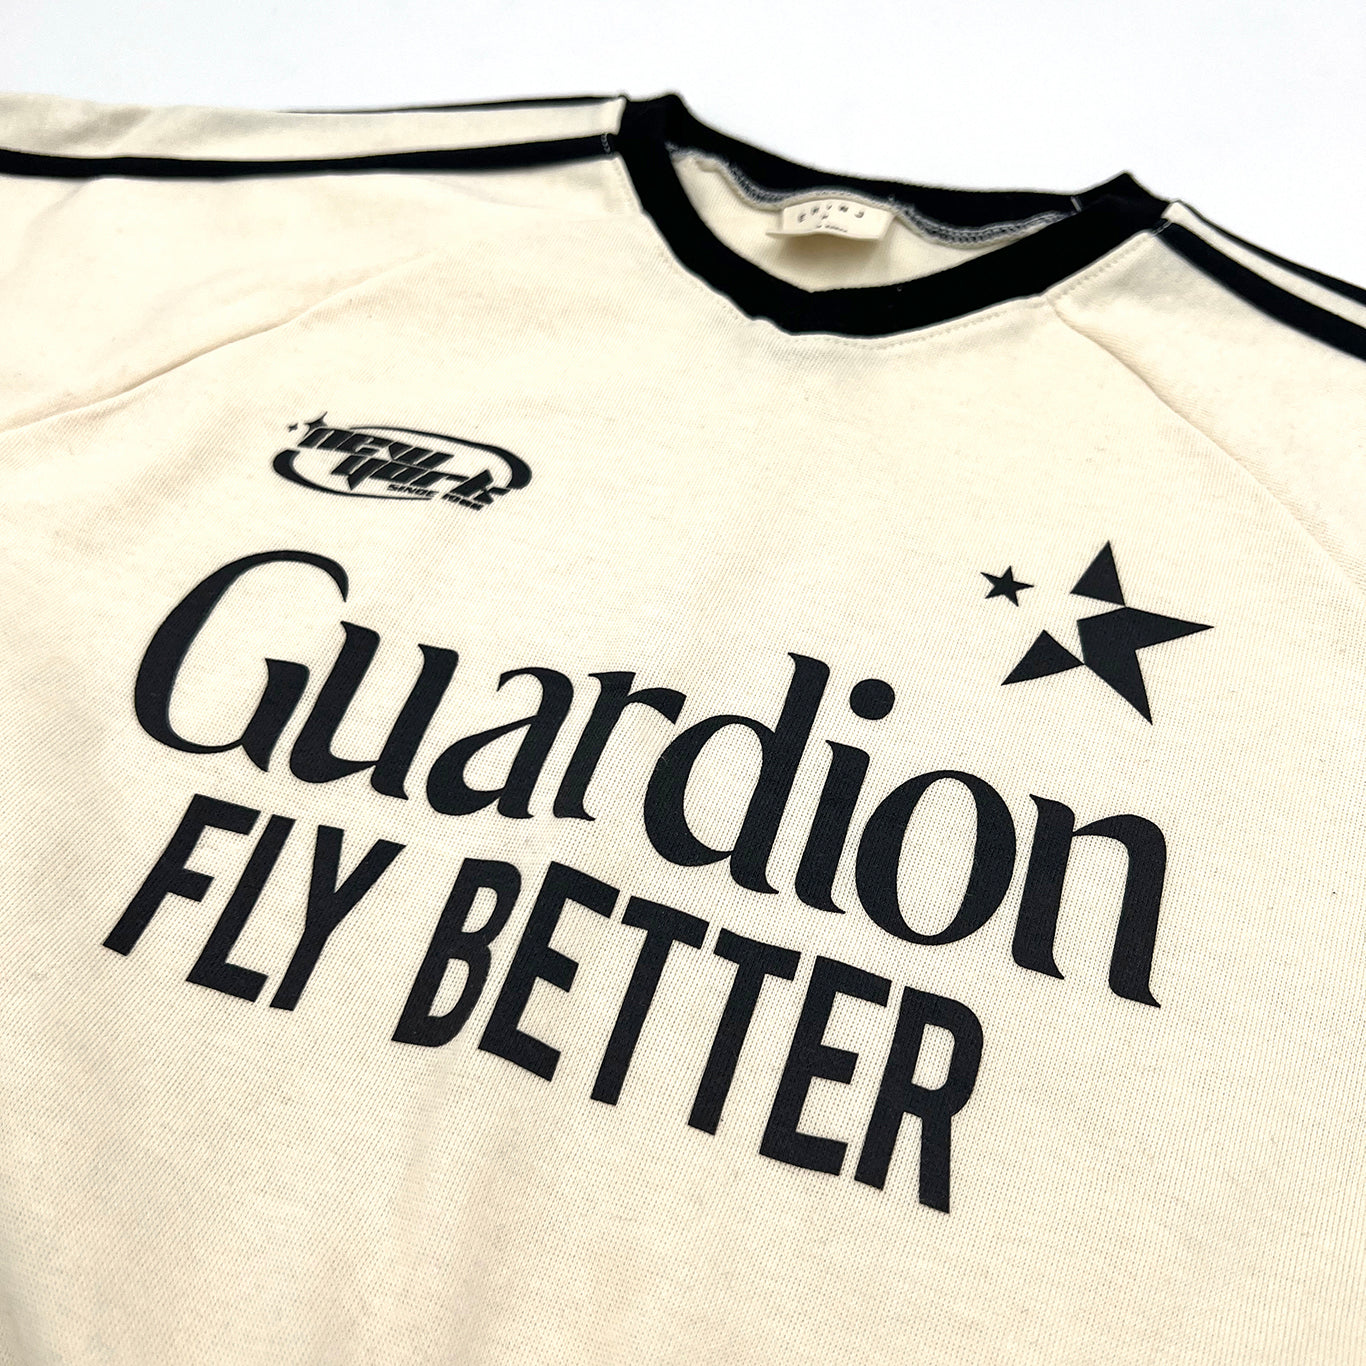 Guardion Soccer Sweatshirt